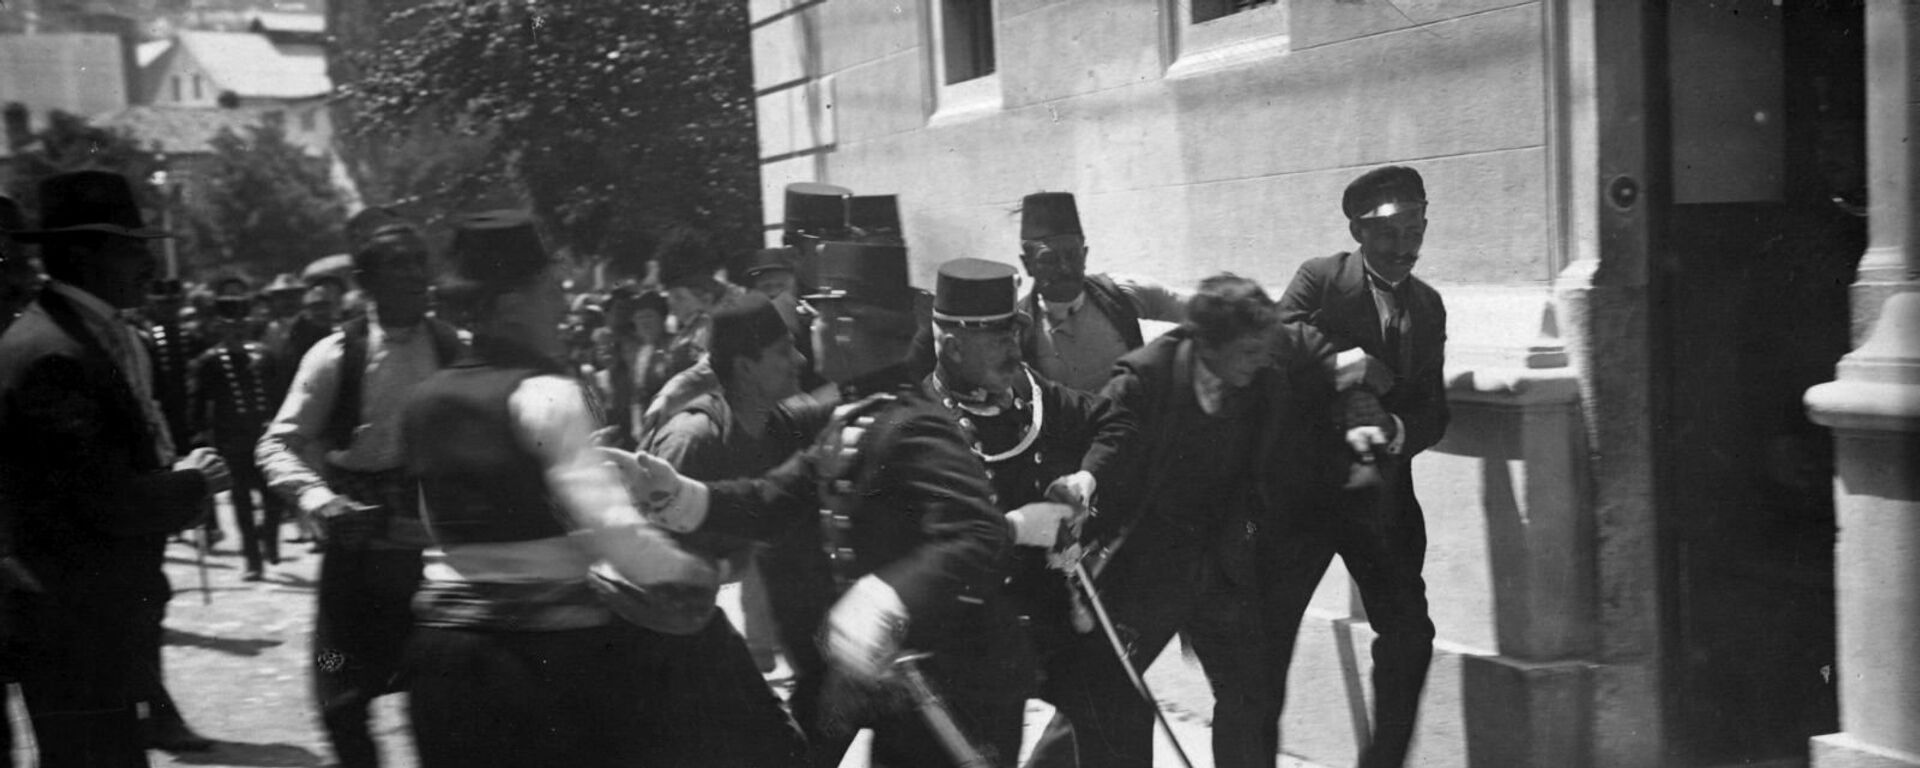 Хапшење Гаврила Принципа након атентата на Франца Фердинанда - Sputnik Србија, 1920, 01.07.2020